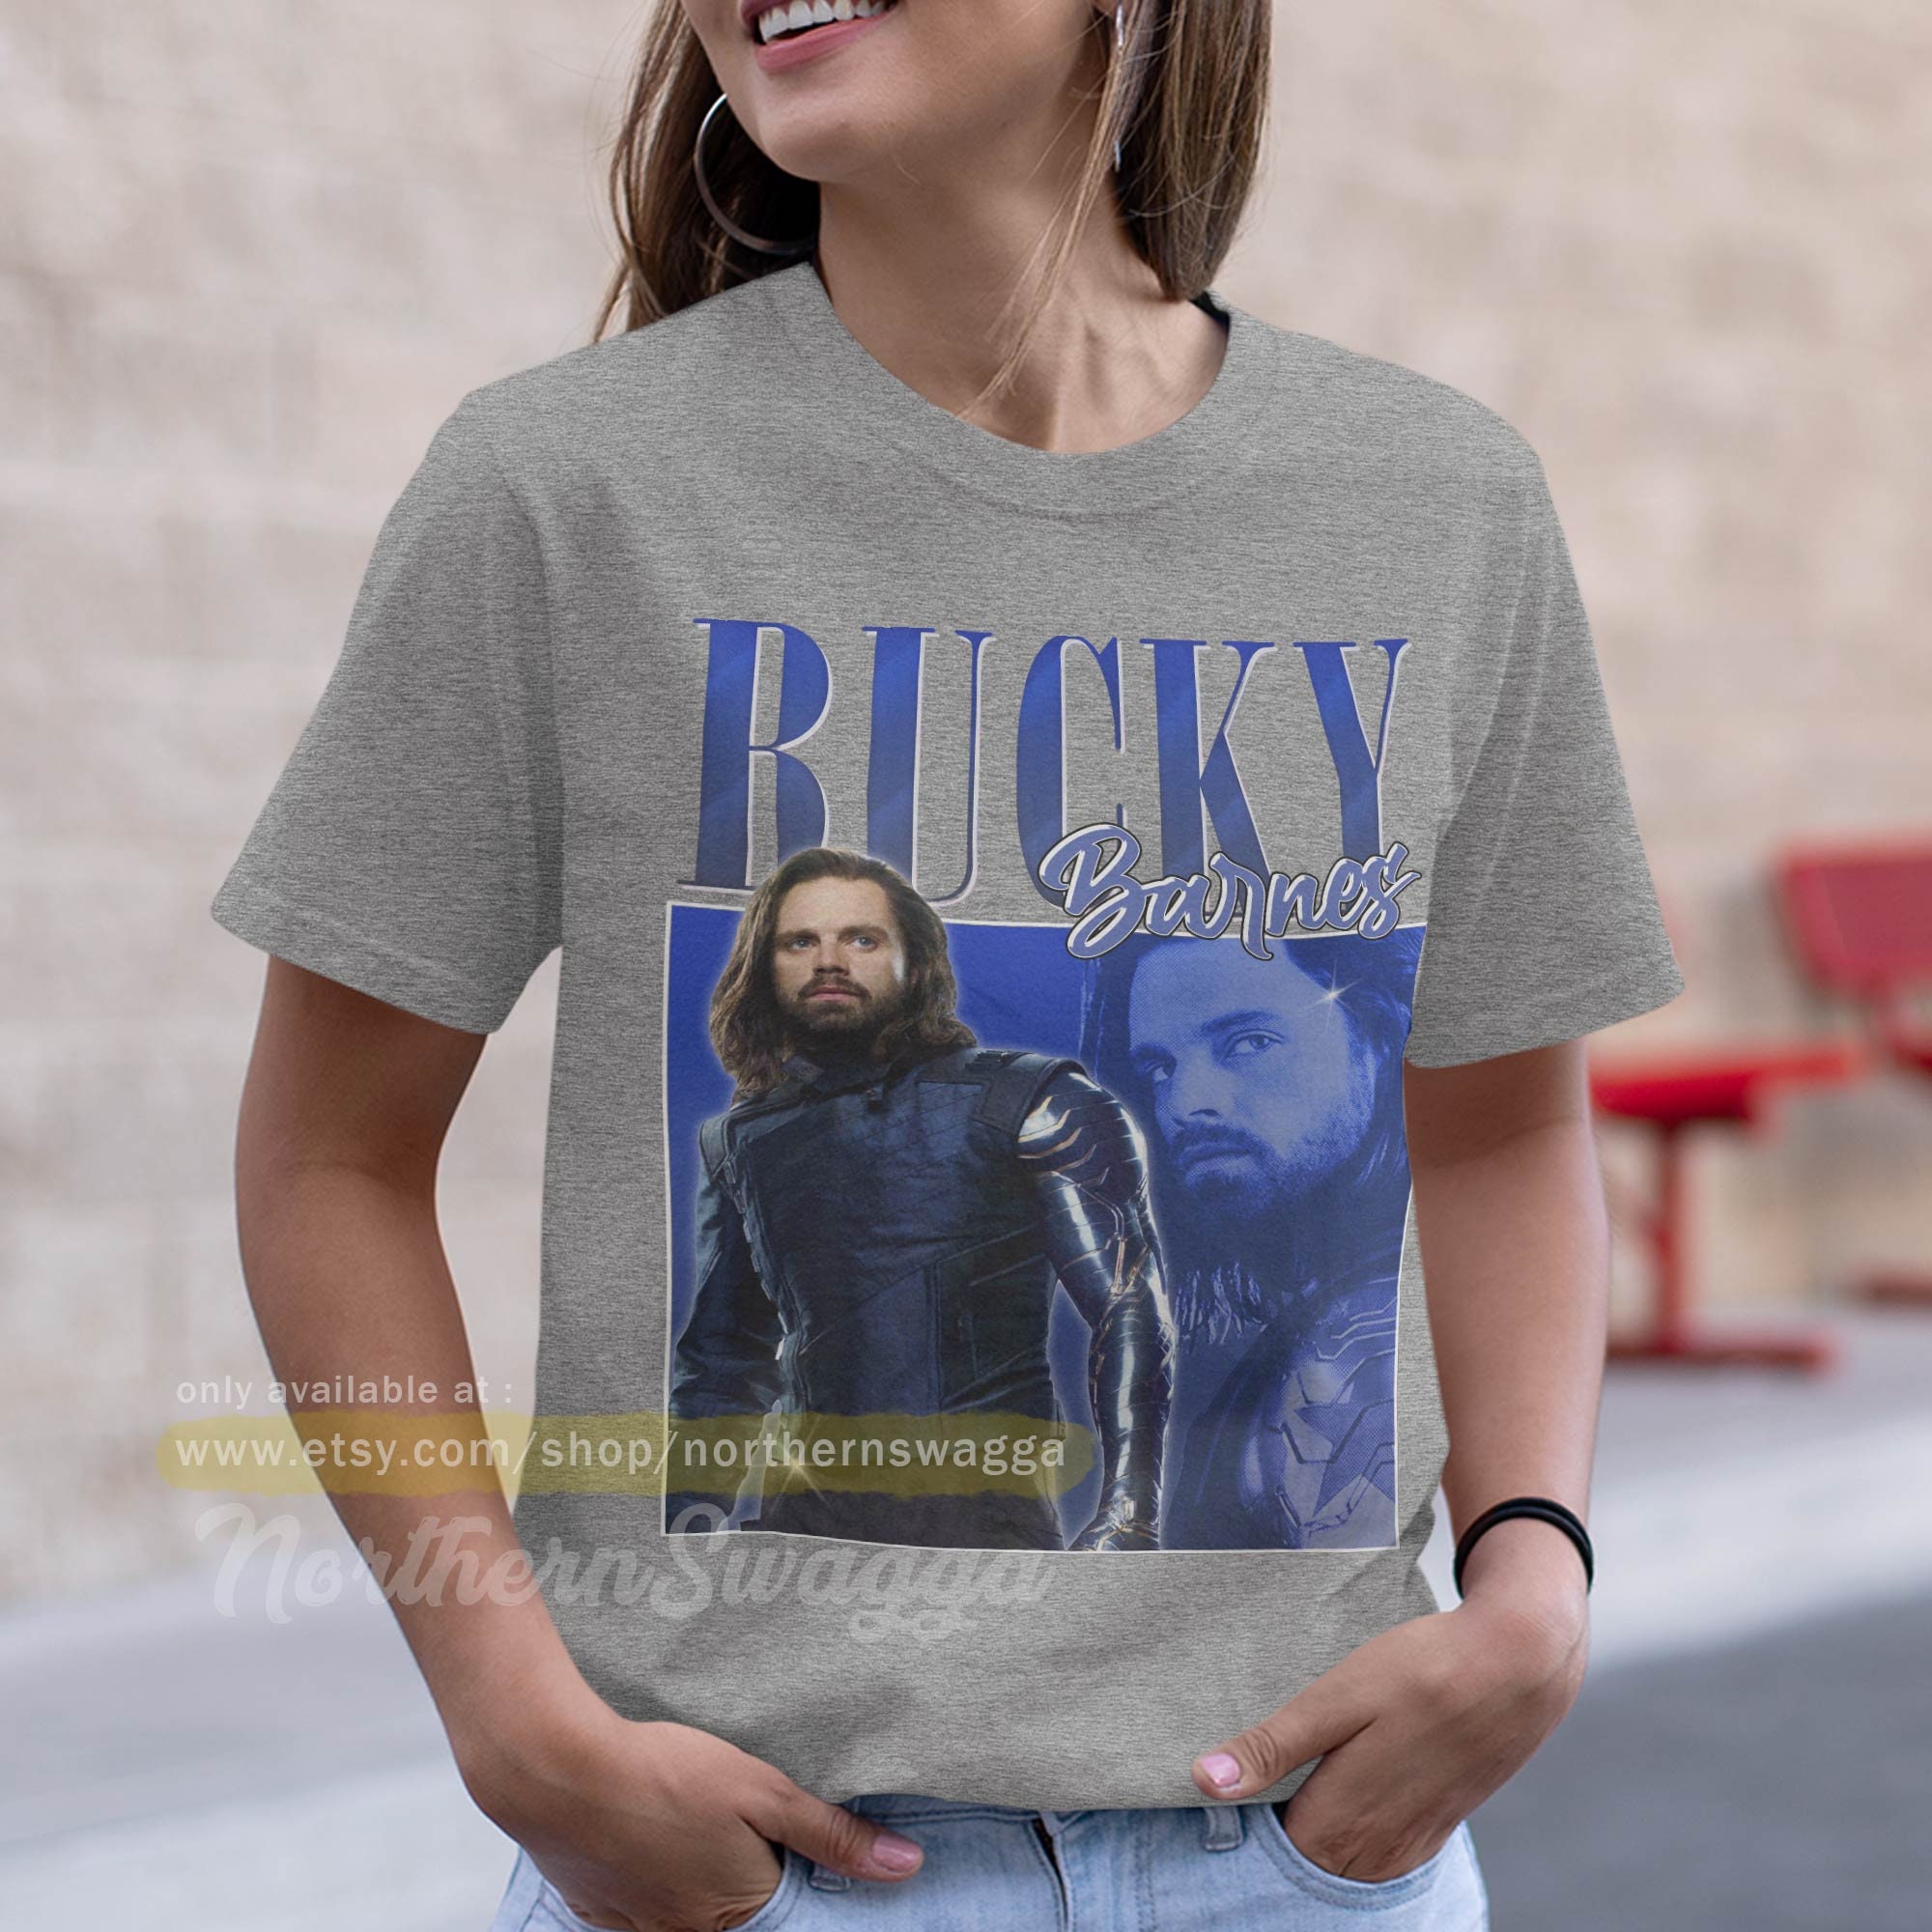 Discover Bucky barnes shirt design retro style cool fan art T-Shirt